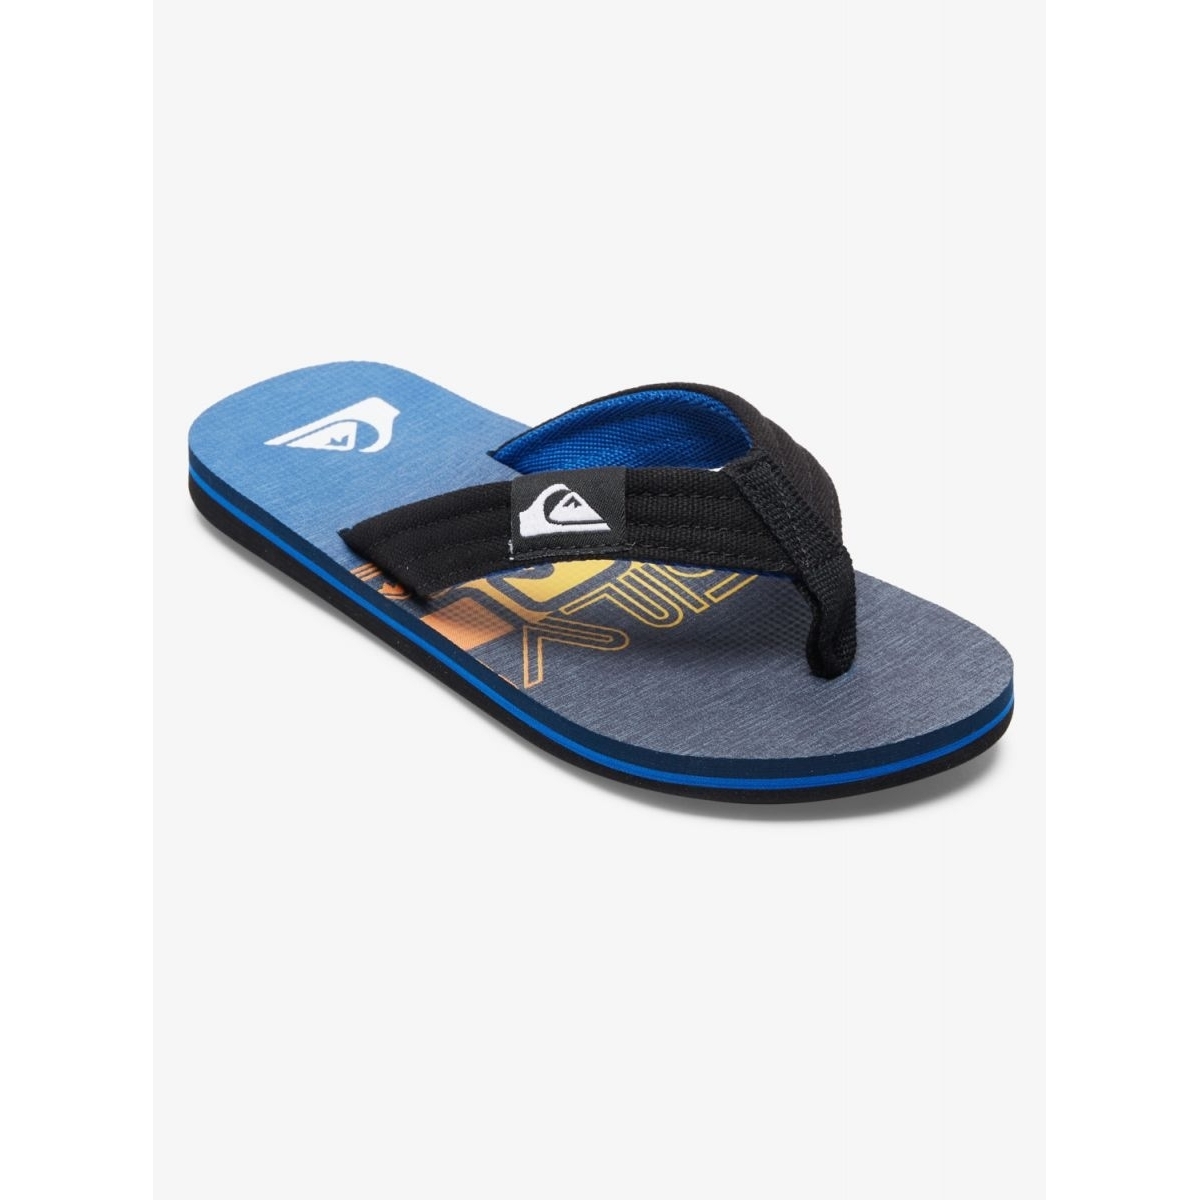 Quiksilver Boys' Molokai Layback Flip Flop Sandals Blue 6 - AQBL100591-BYJ6 BLUE 6 - BLUE 6, 12 Little Kid